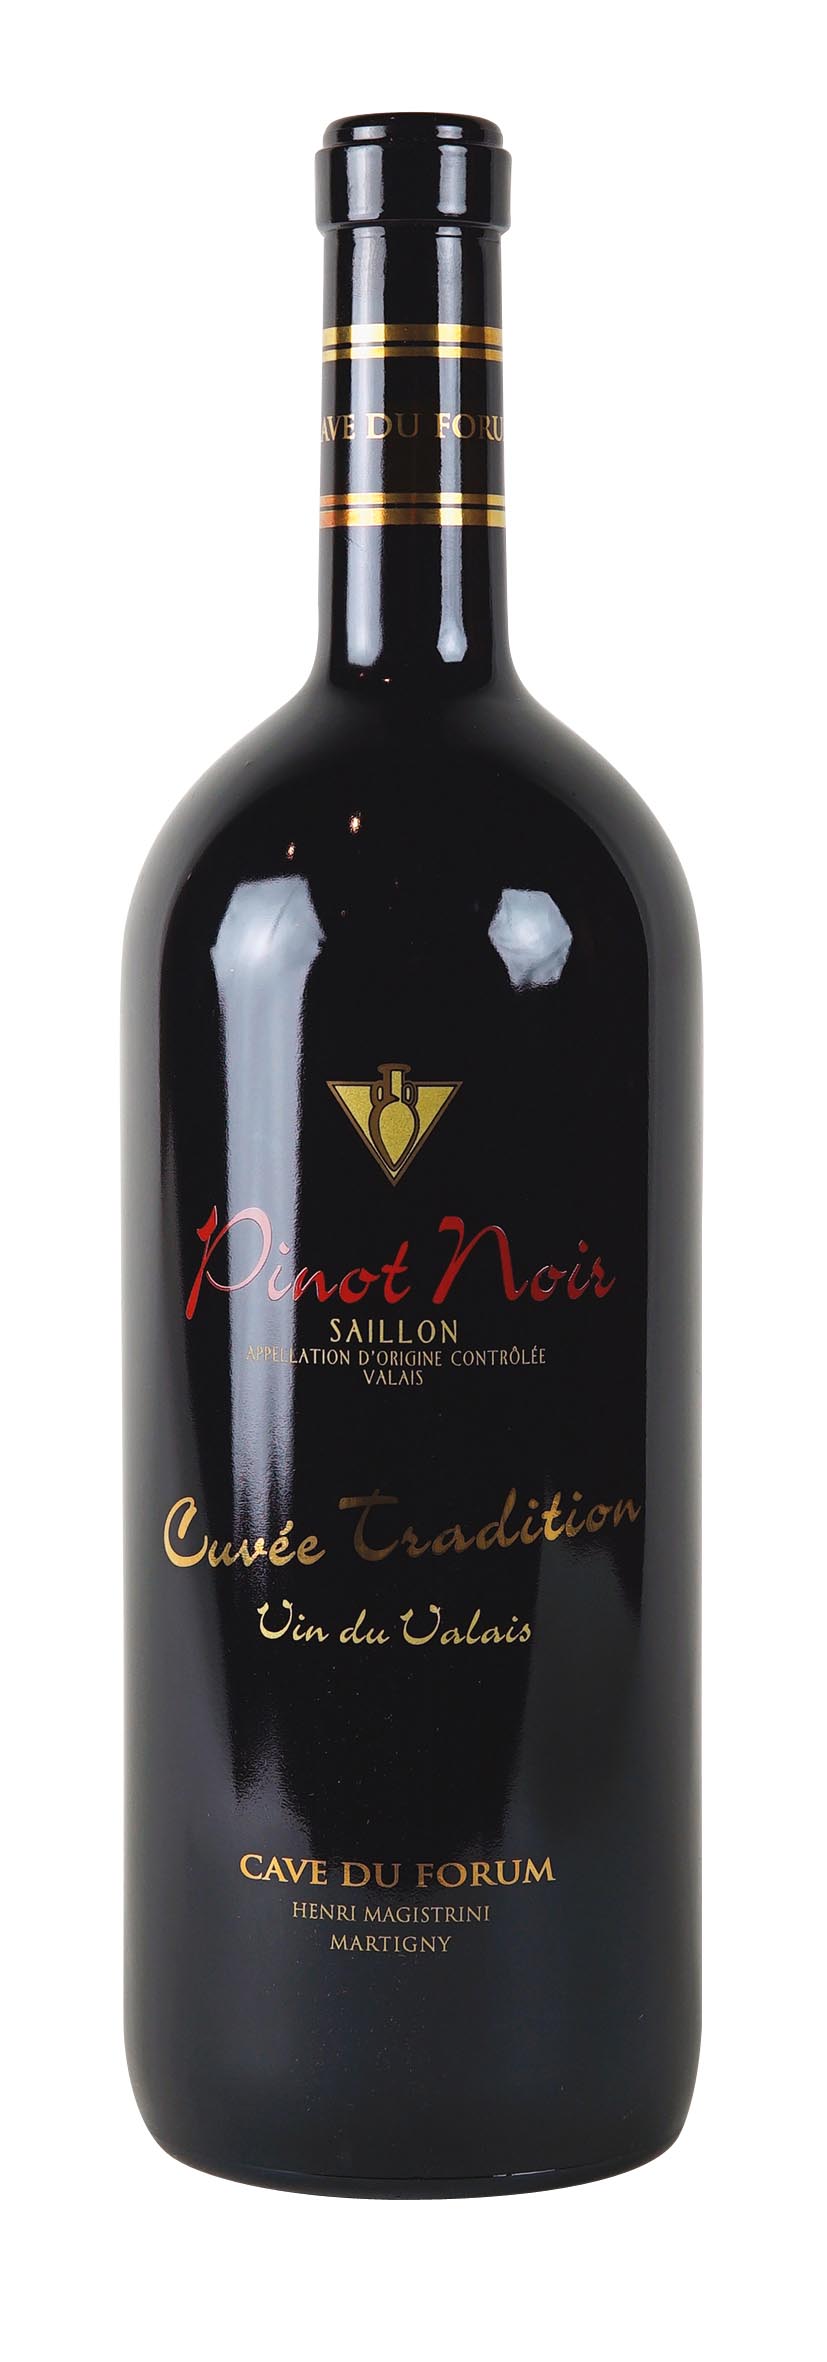 Valais AOC Pinot Noir Tradition 2015